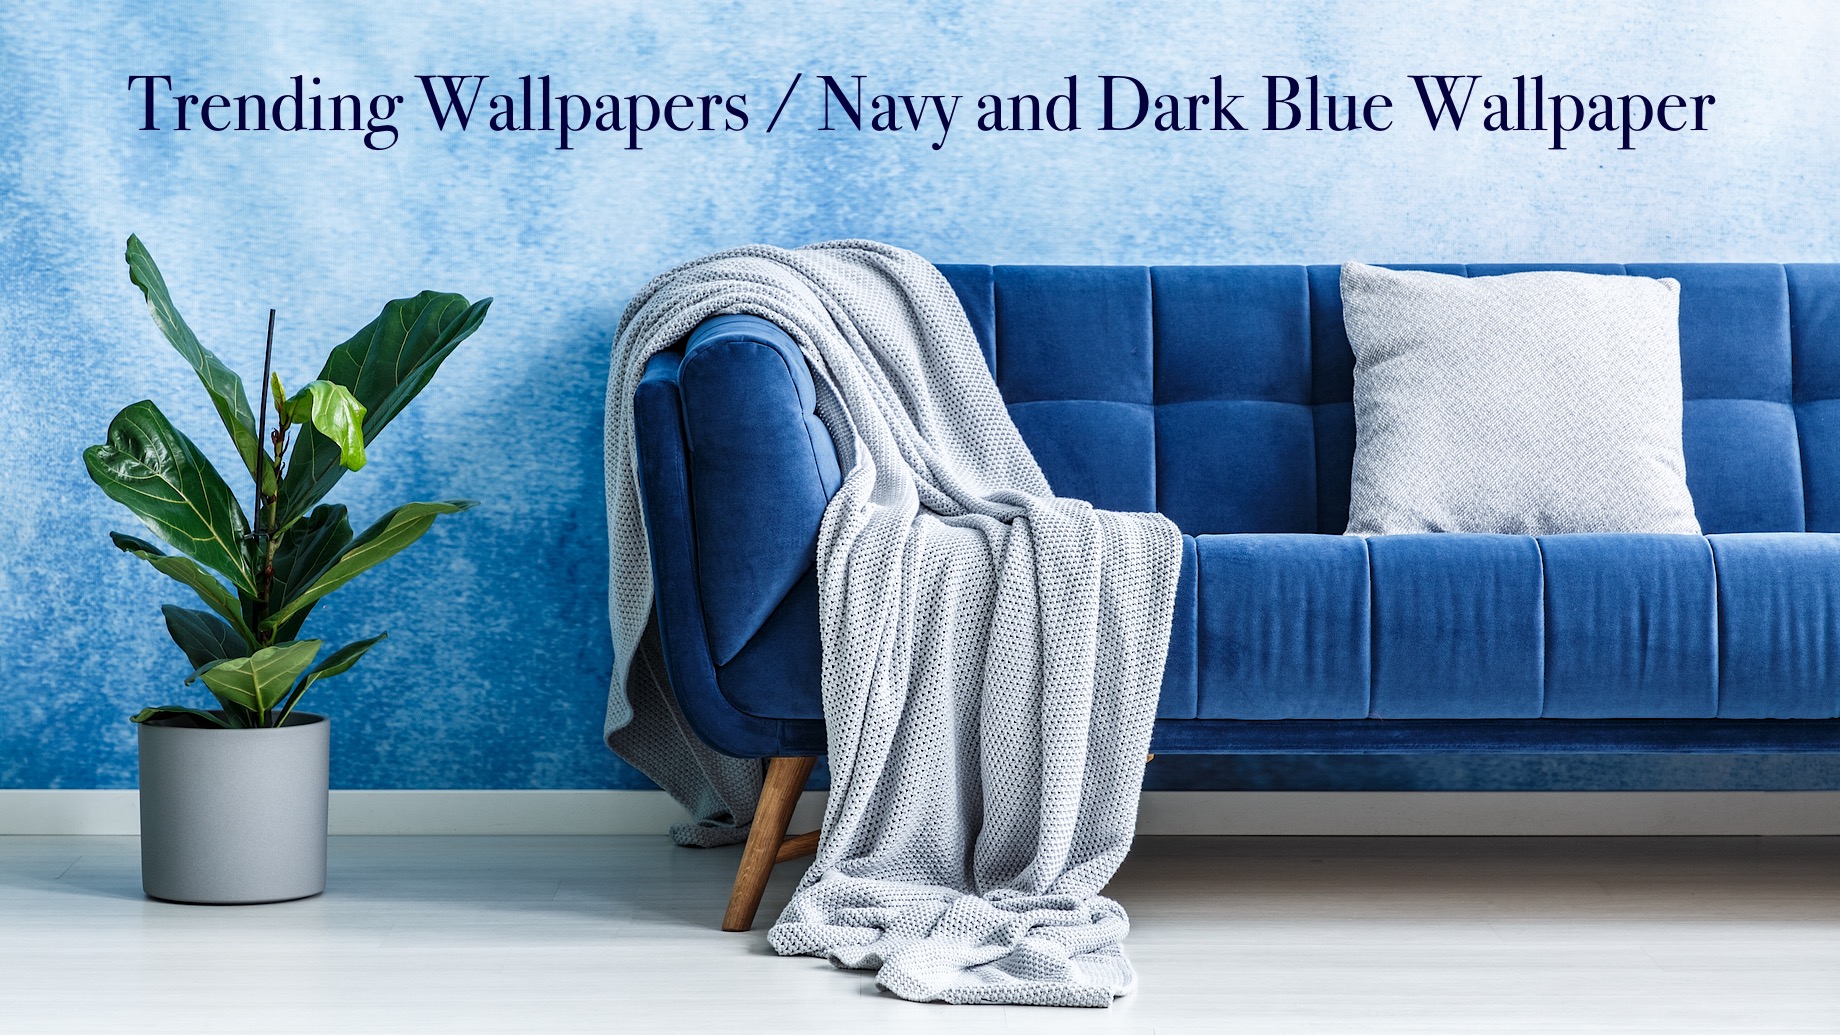 Trending Wallpapers - Navy and Dark Blue Wallpaper